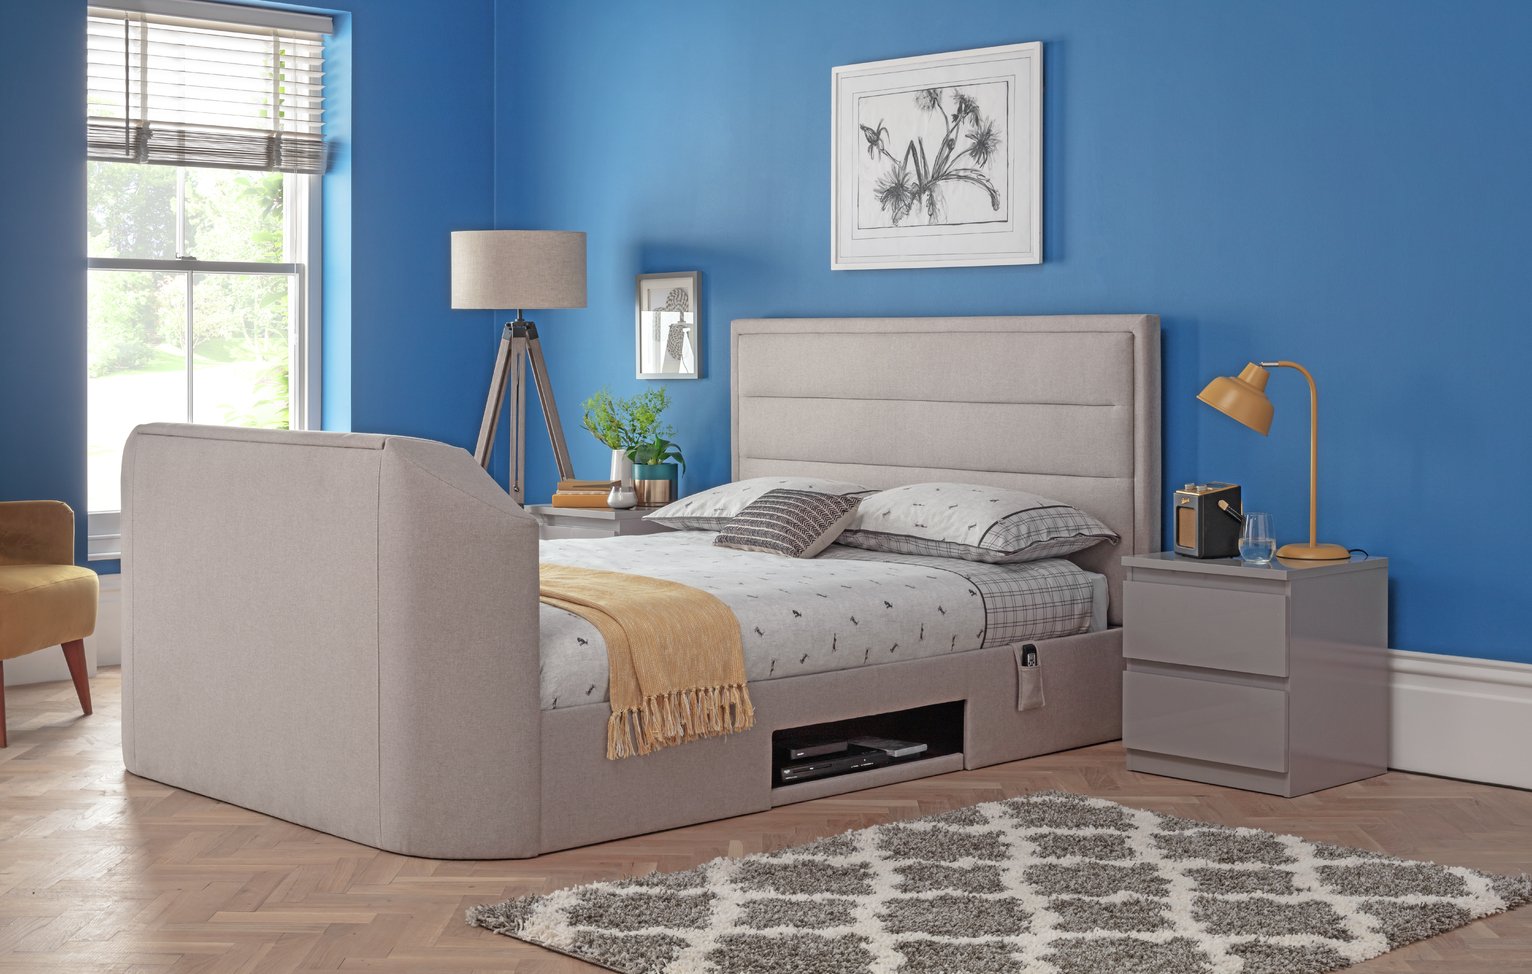 Argos Home Thornbury Double TV Bed Frame Review